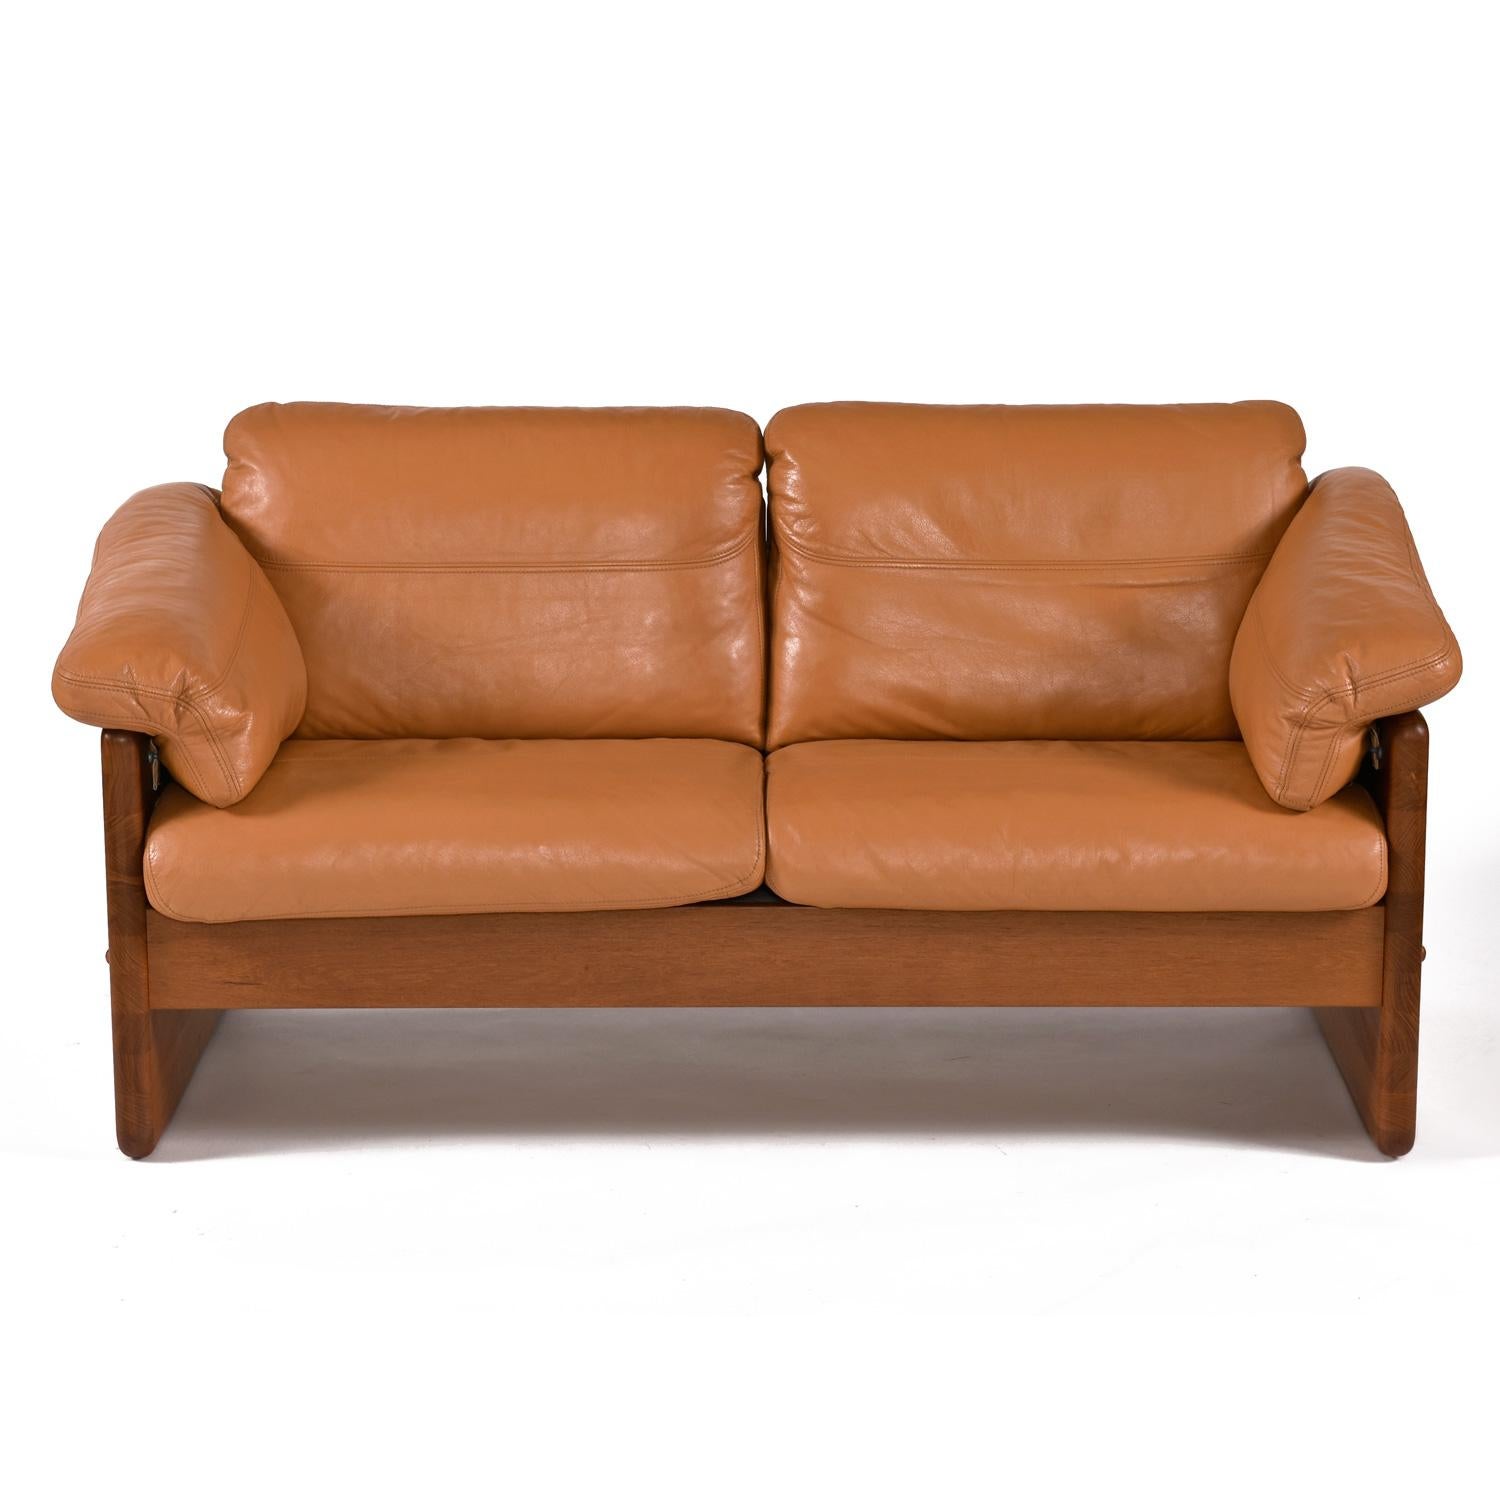 Original Cognac Leather Solid Teak Danish Sofa Loveseat Set by A. Mikael Laursen For Sale 2